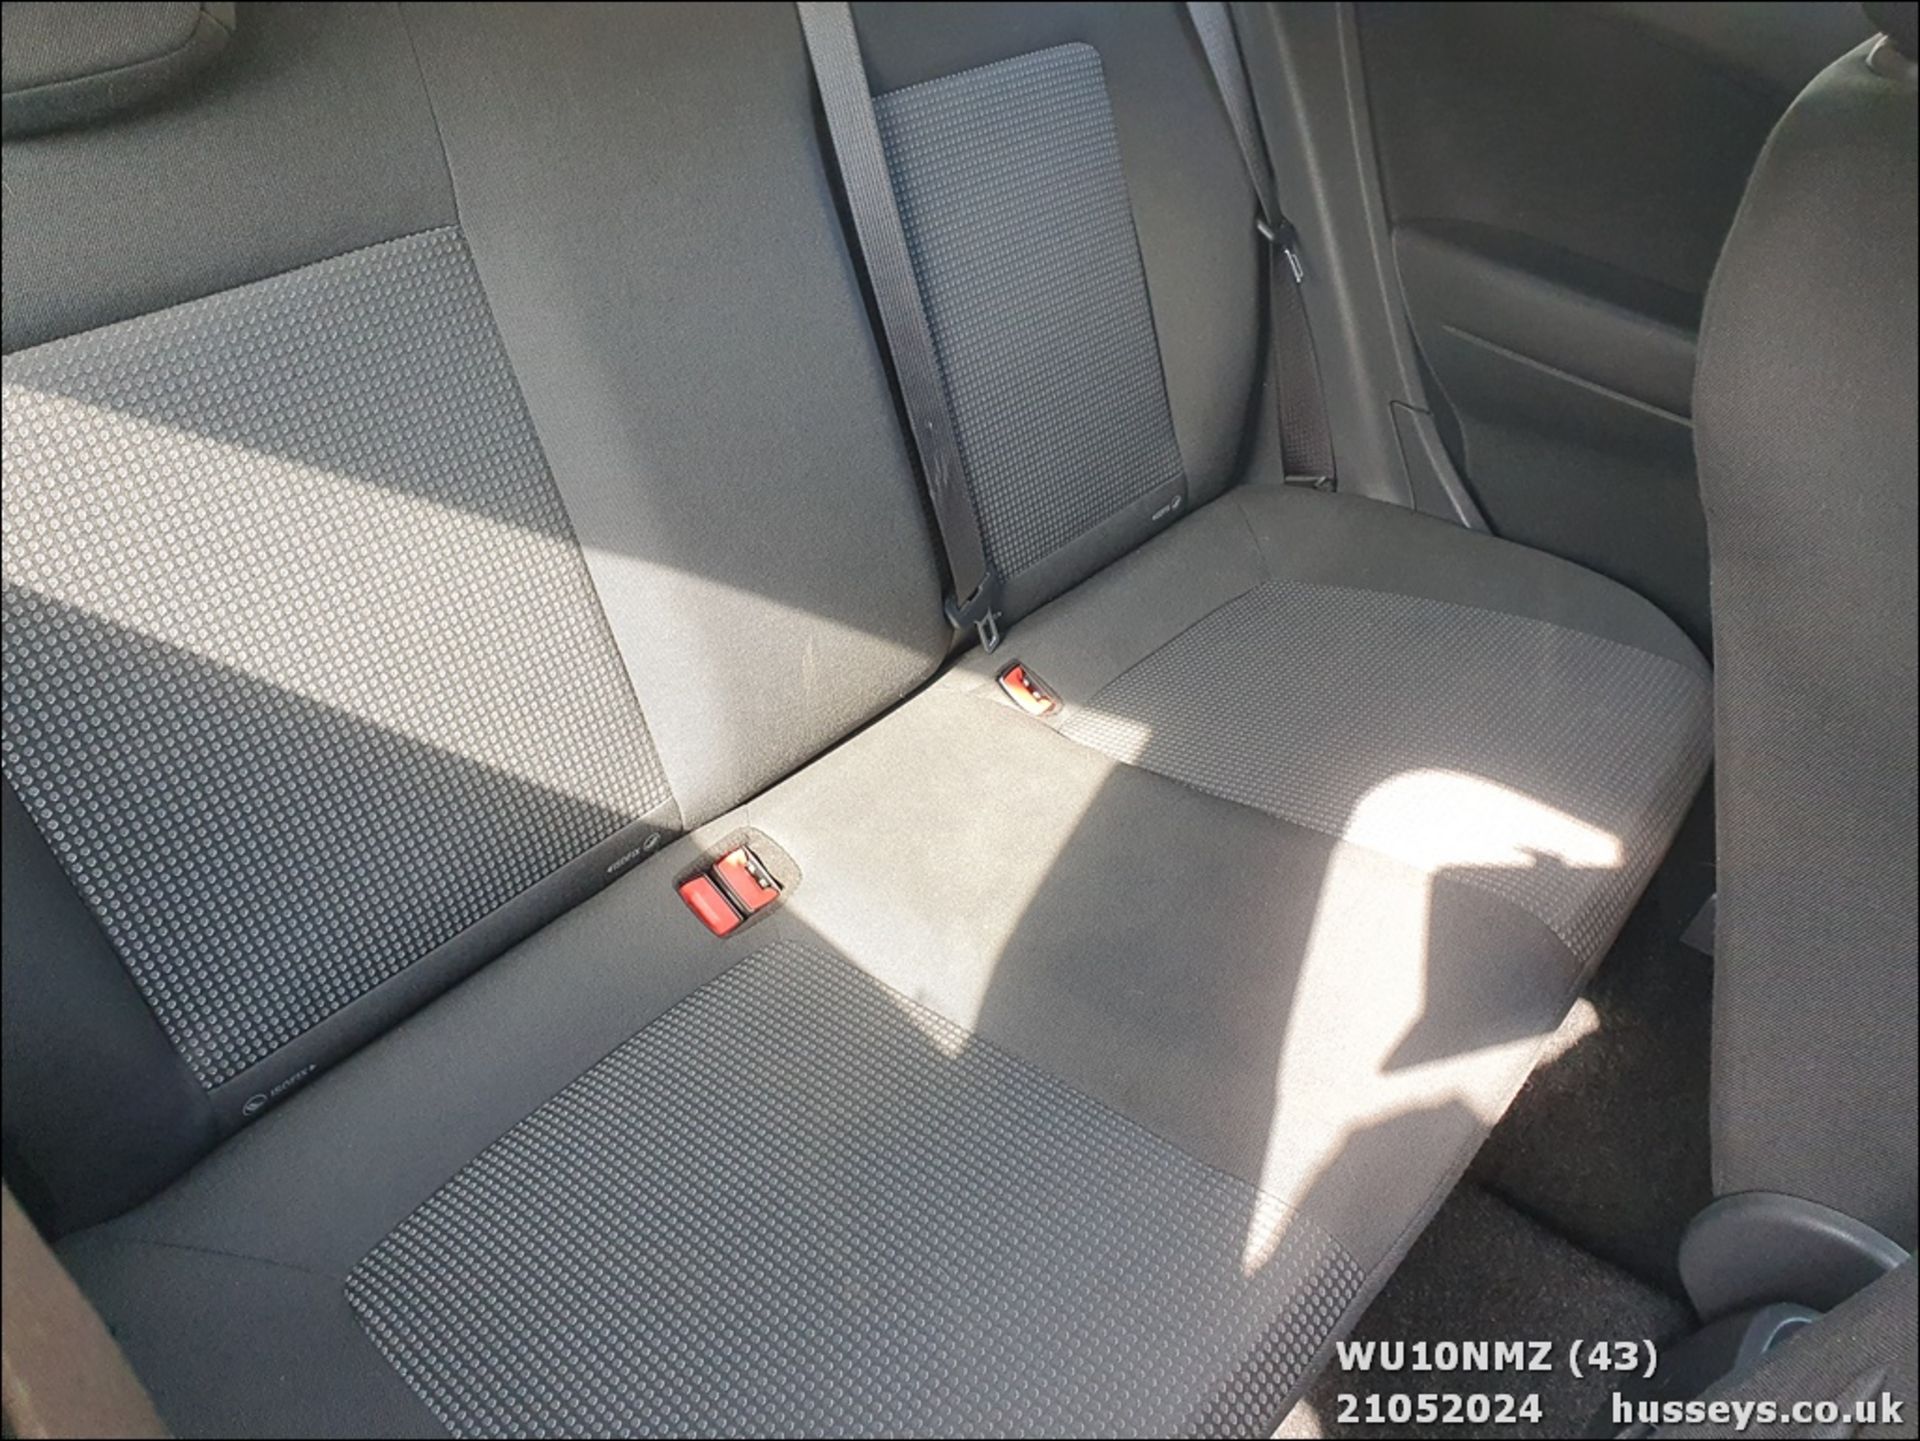 10/10 VAUXHALL CORSA S CDTI 73 ECOFLEX - 1248cc 3dr Hatchback (White, 61k) - Image 44 of 48